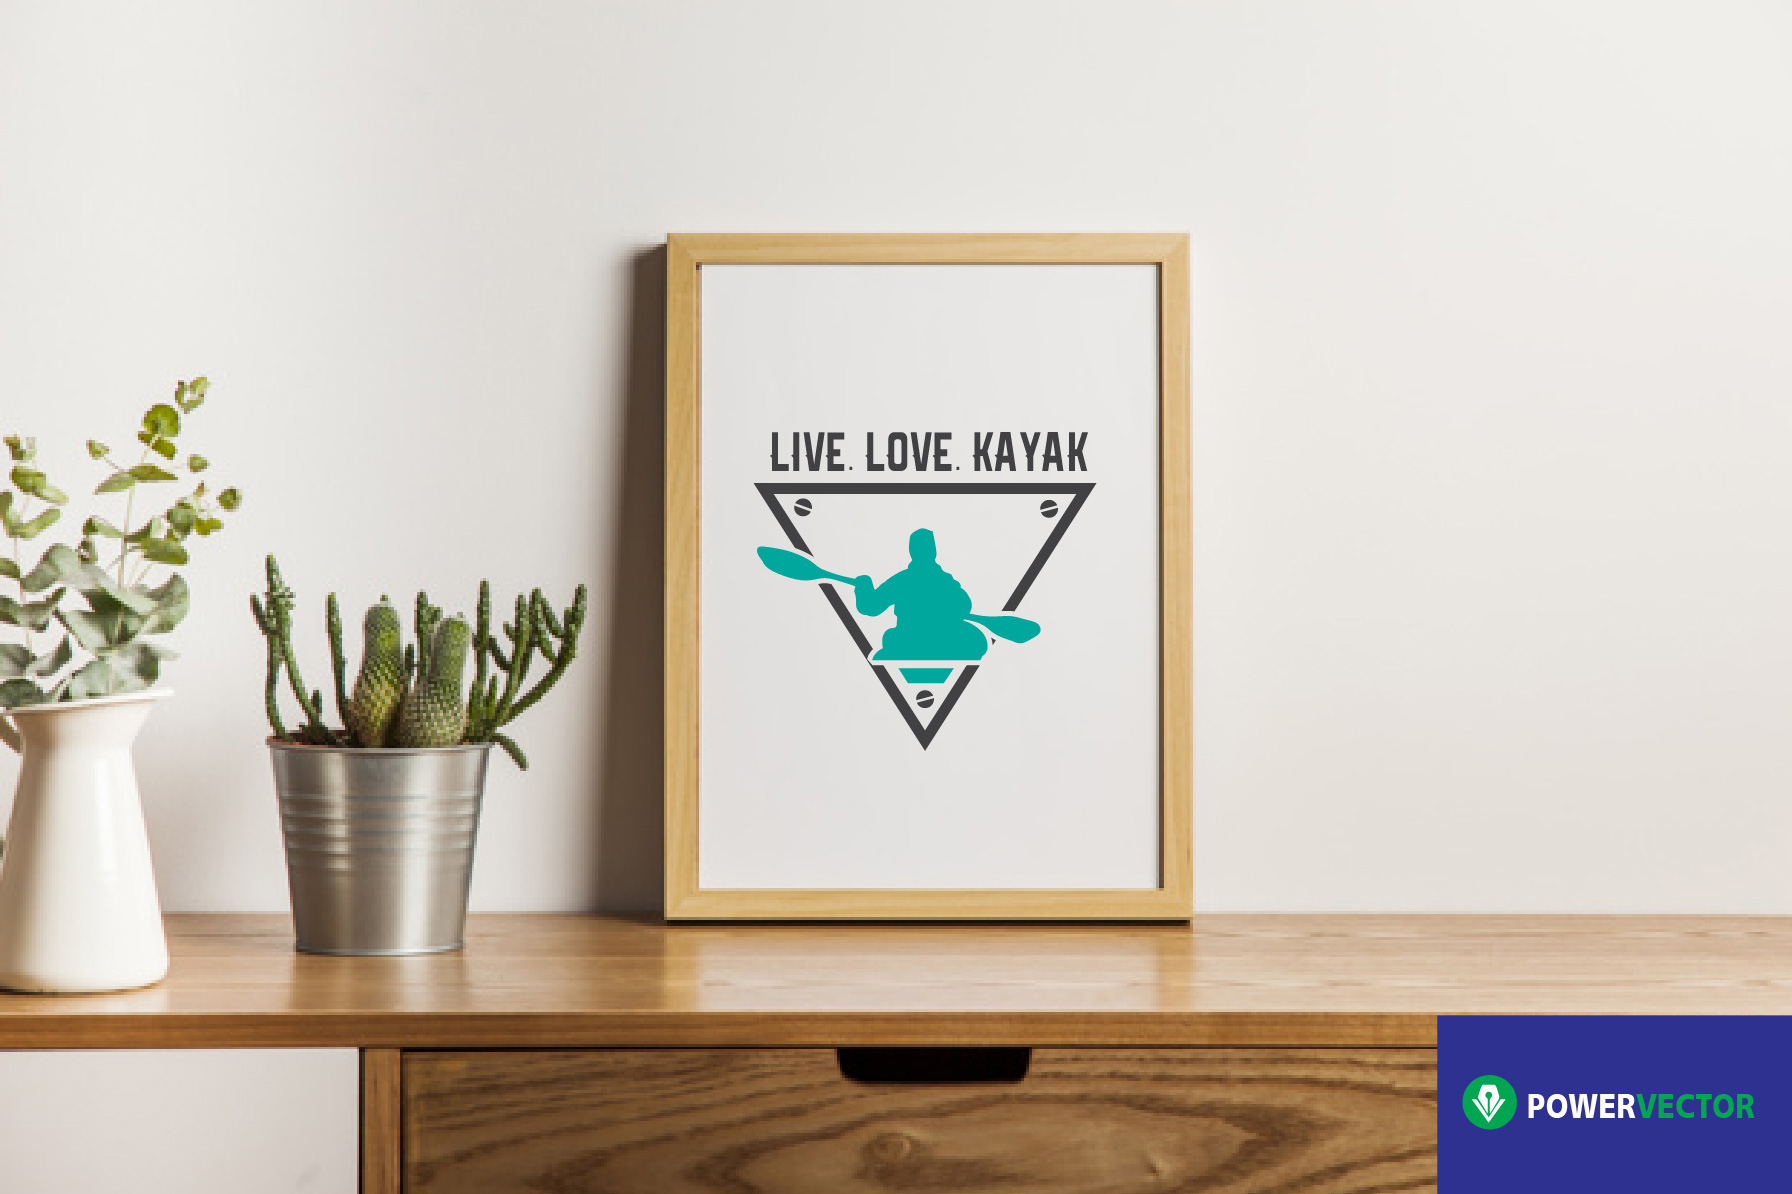 Live Love Kayak Svg, Dxf, Eps Cutting Files